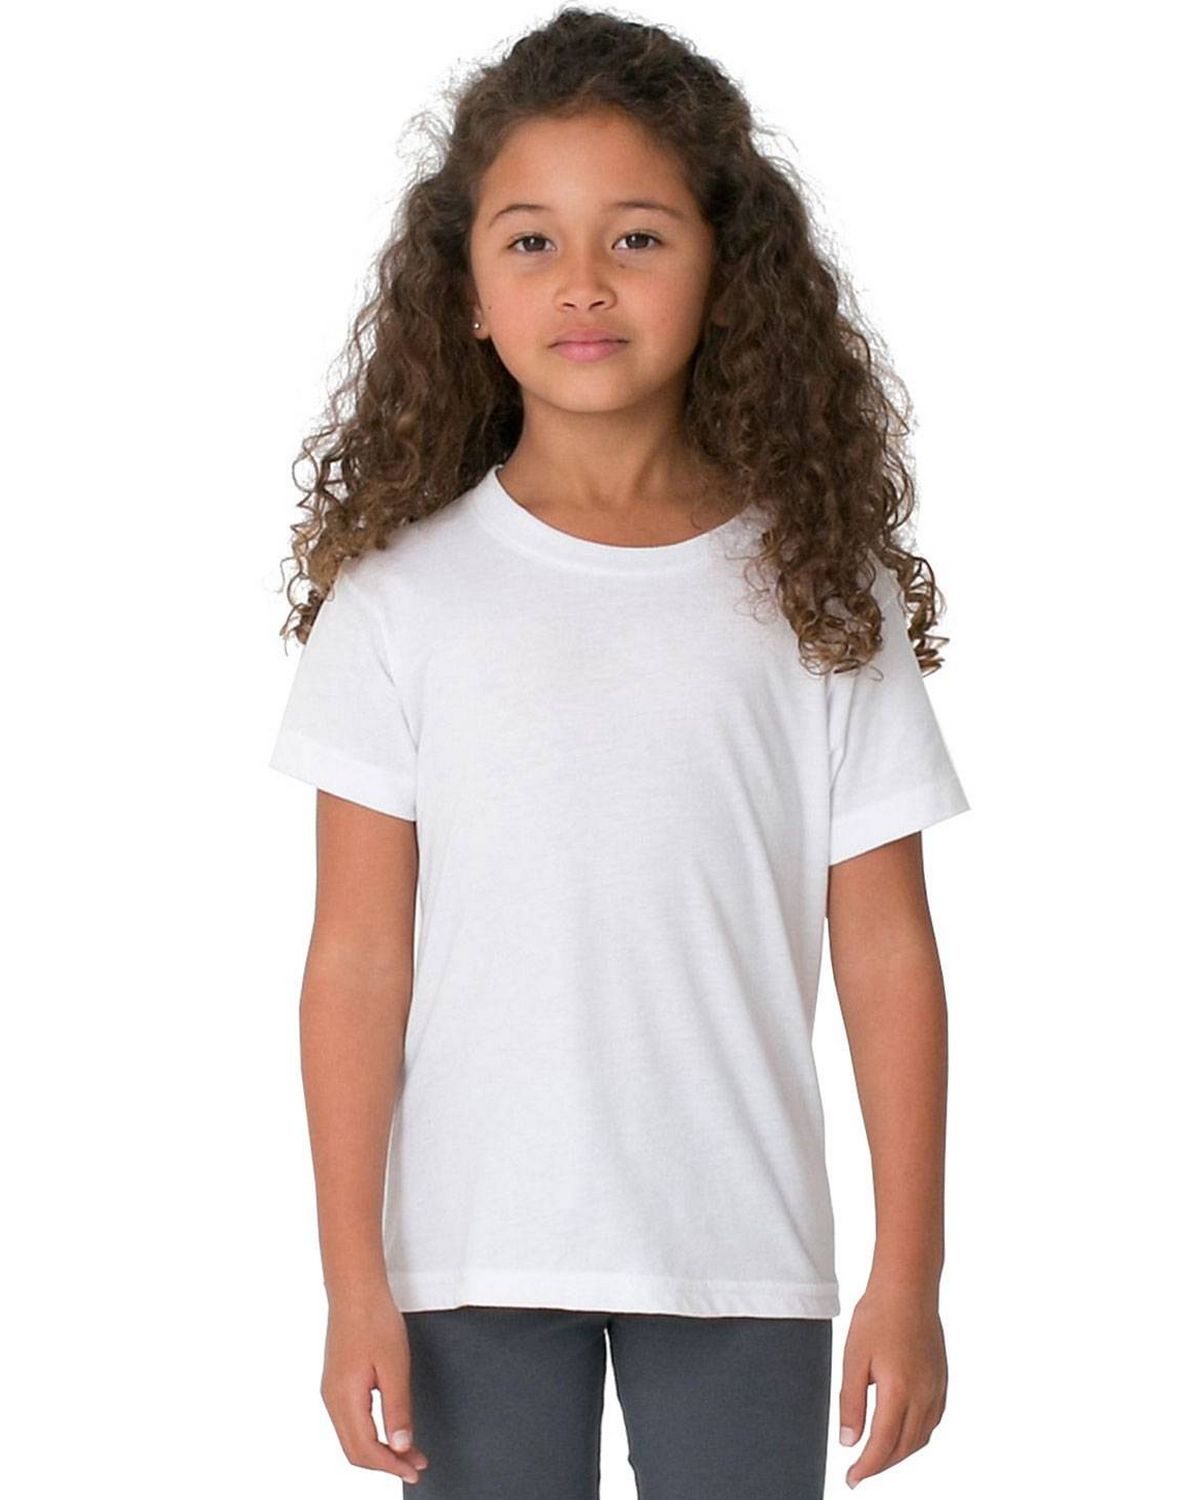 American Apparel 2105W Toddler Fine Jersey T-Shirt